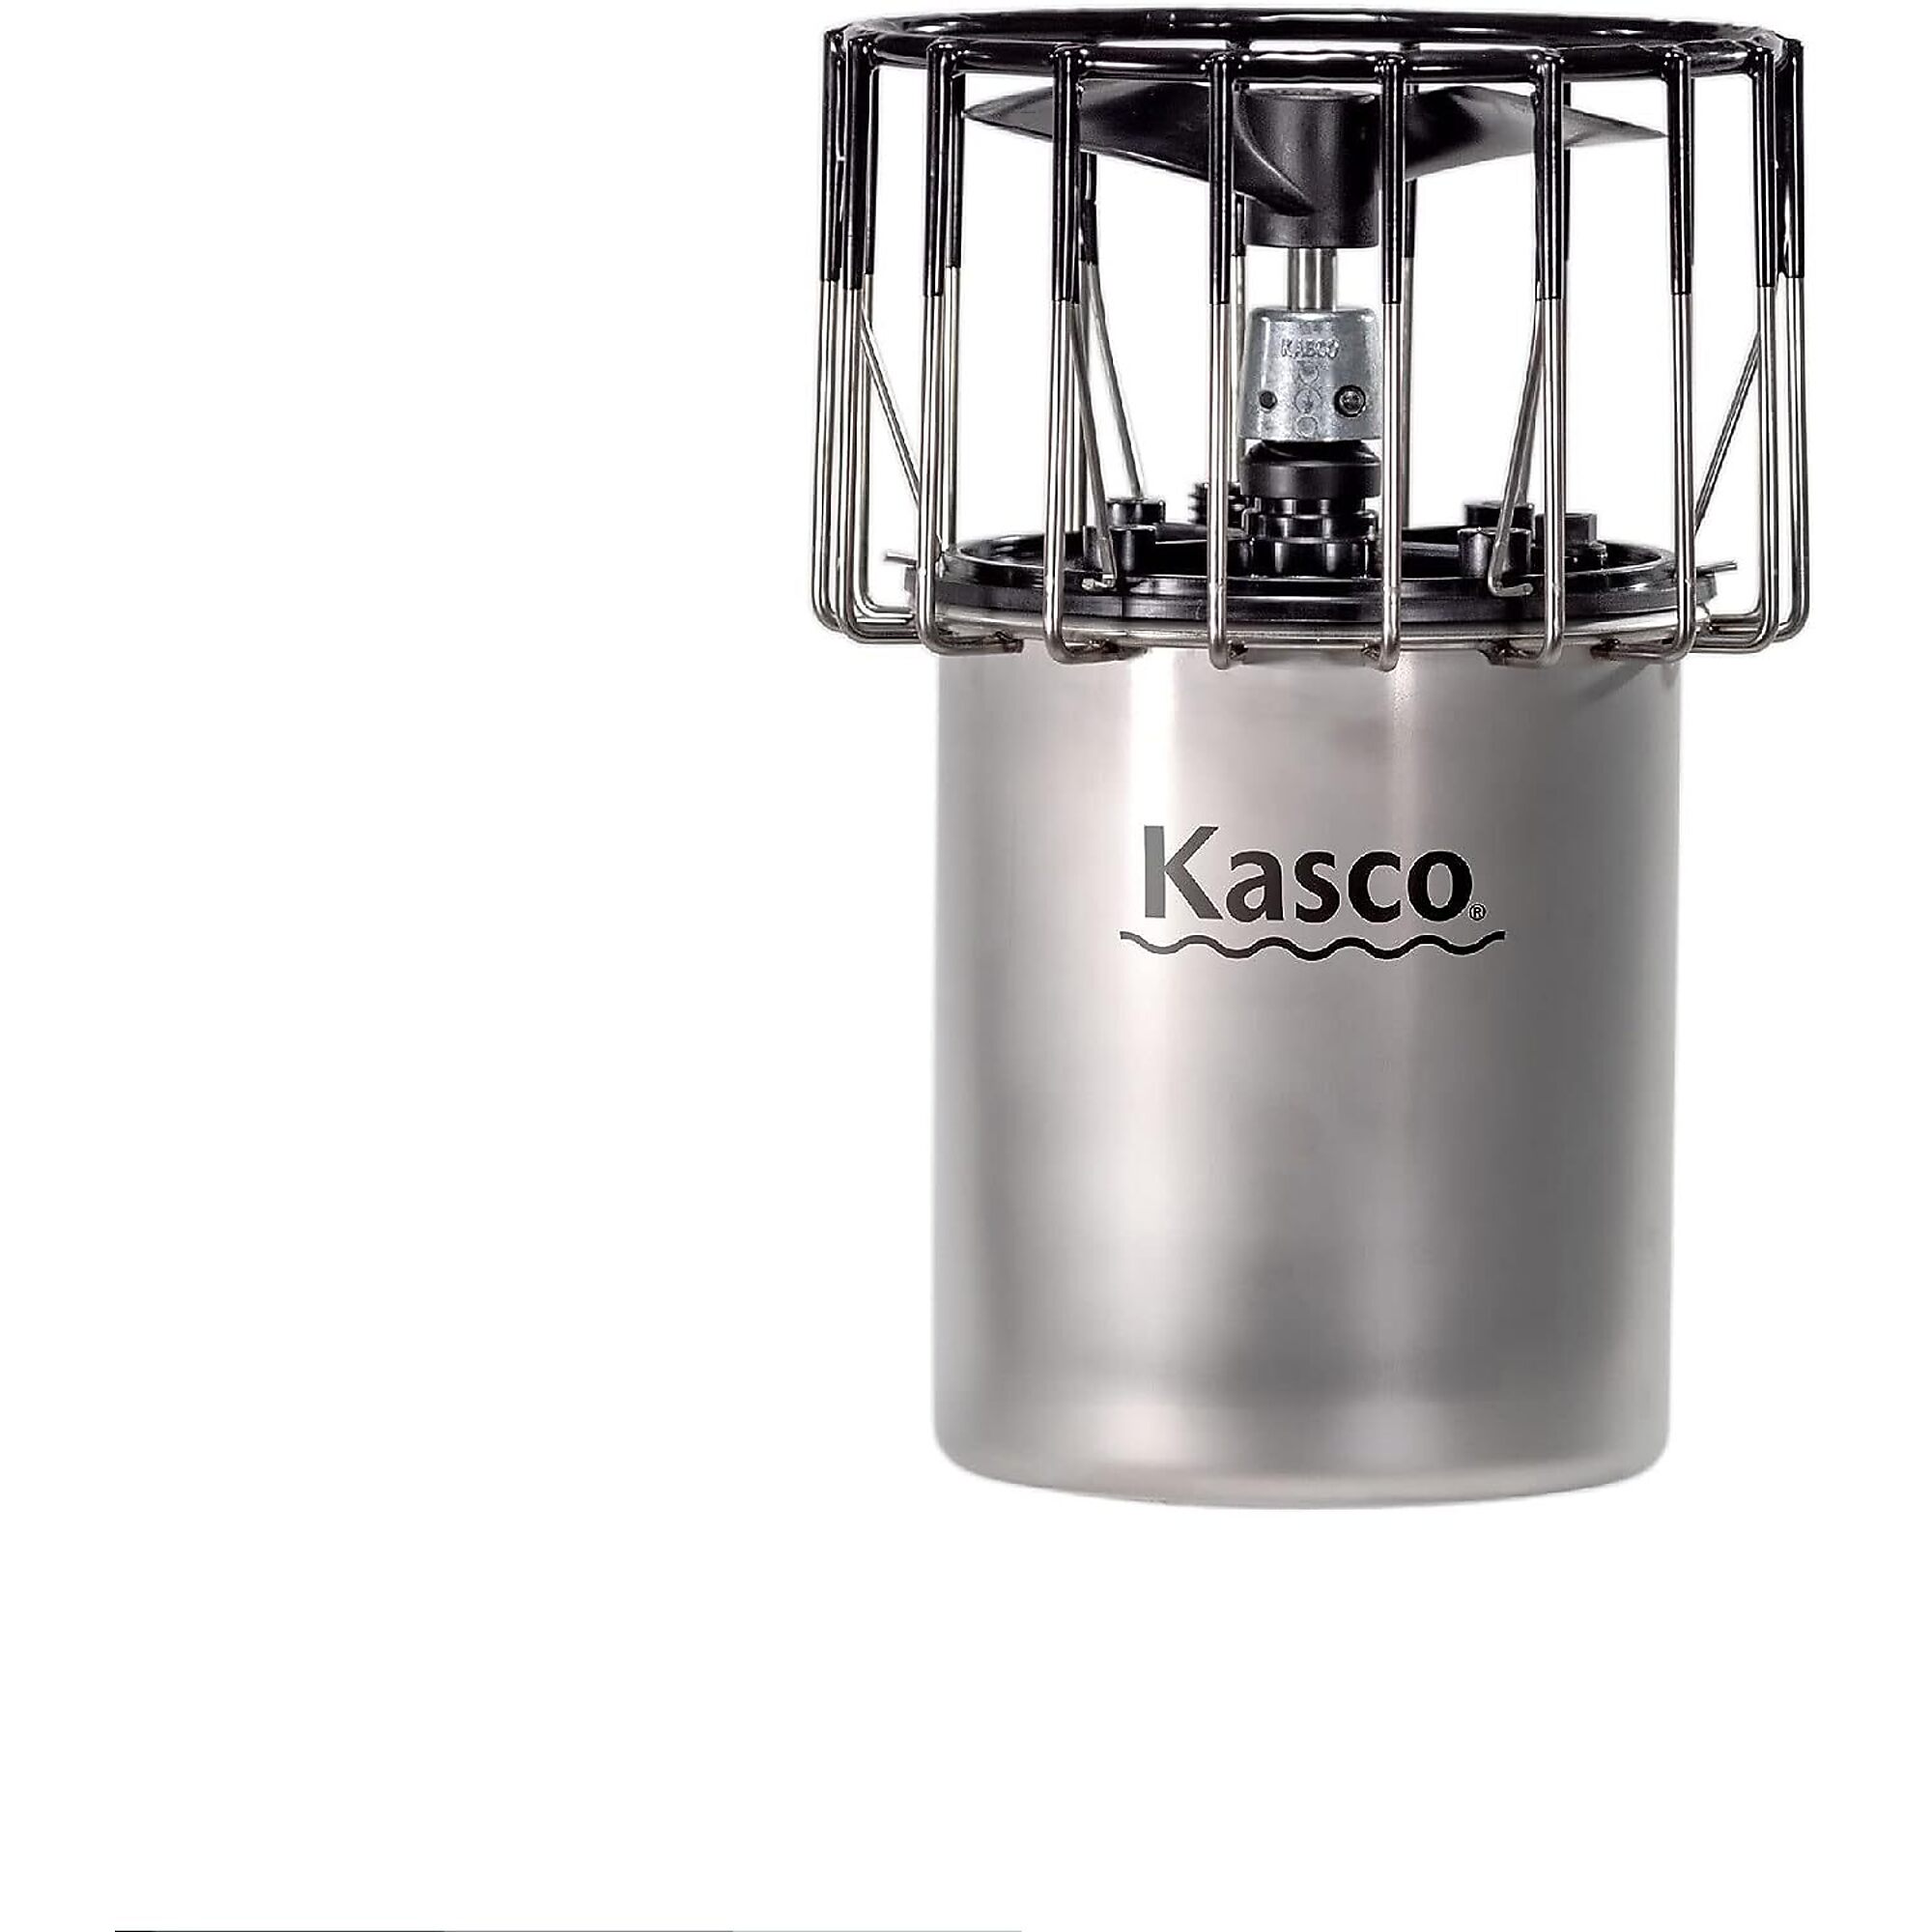 Kasco, De-icer Single for Pond and Lake Bubbler 240V, Volts 120 Horsepower 1 Model 4400HD050